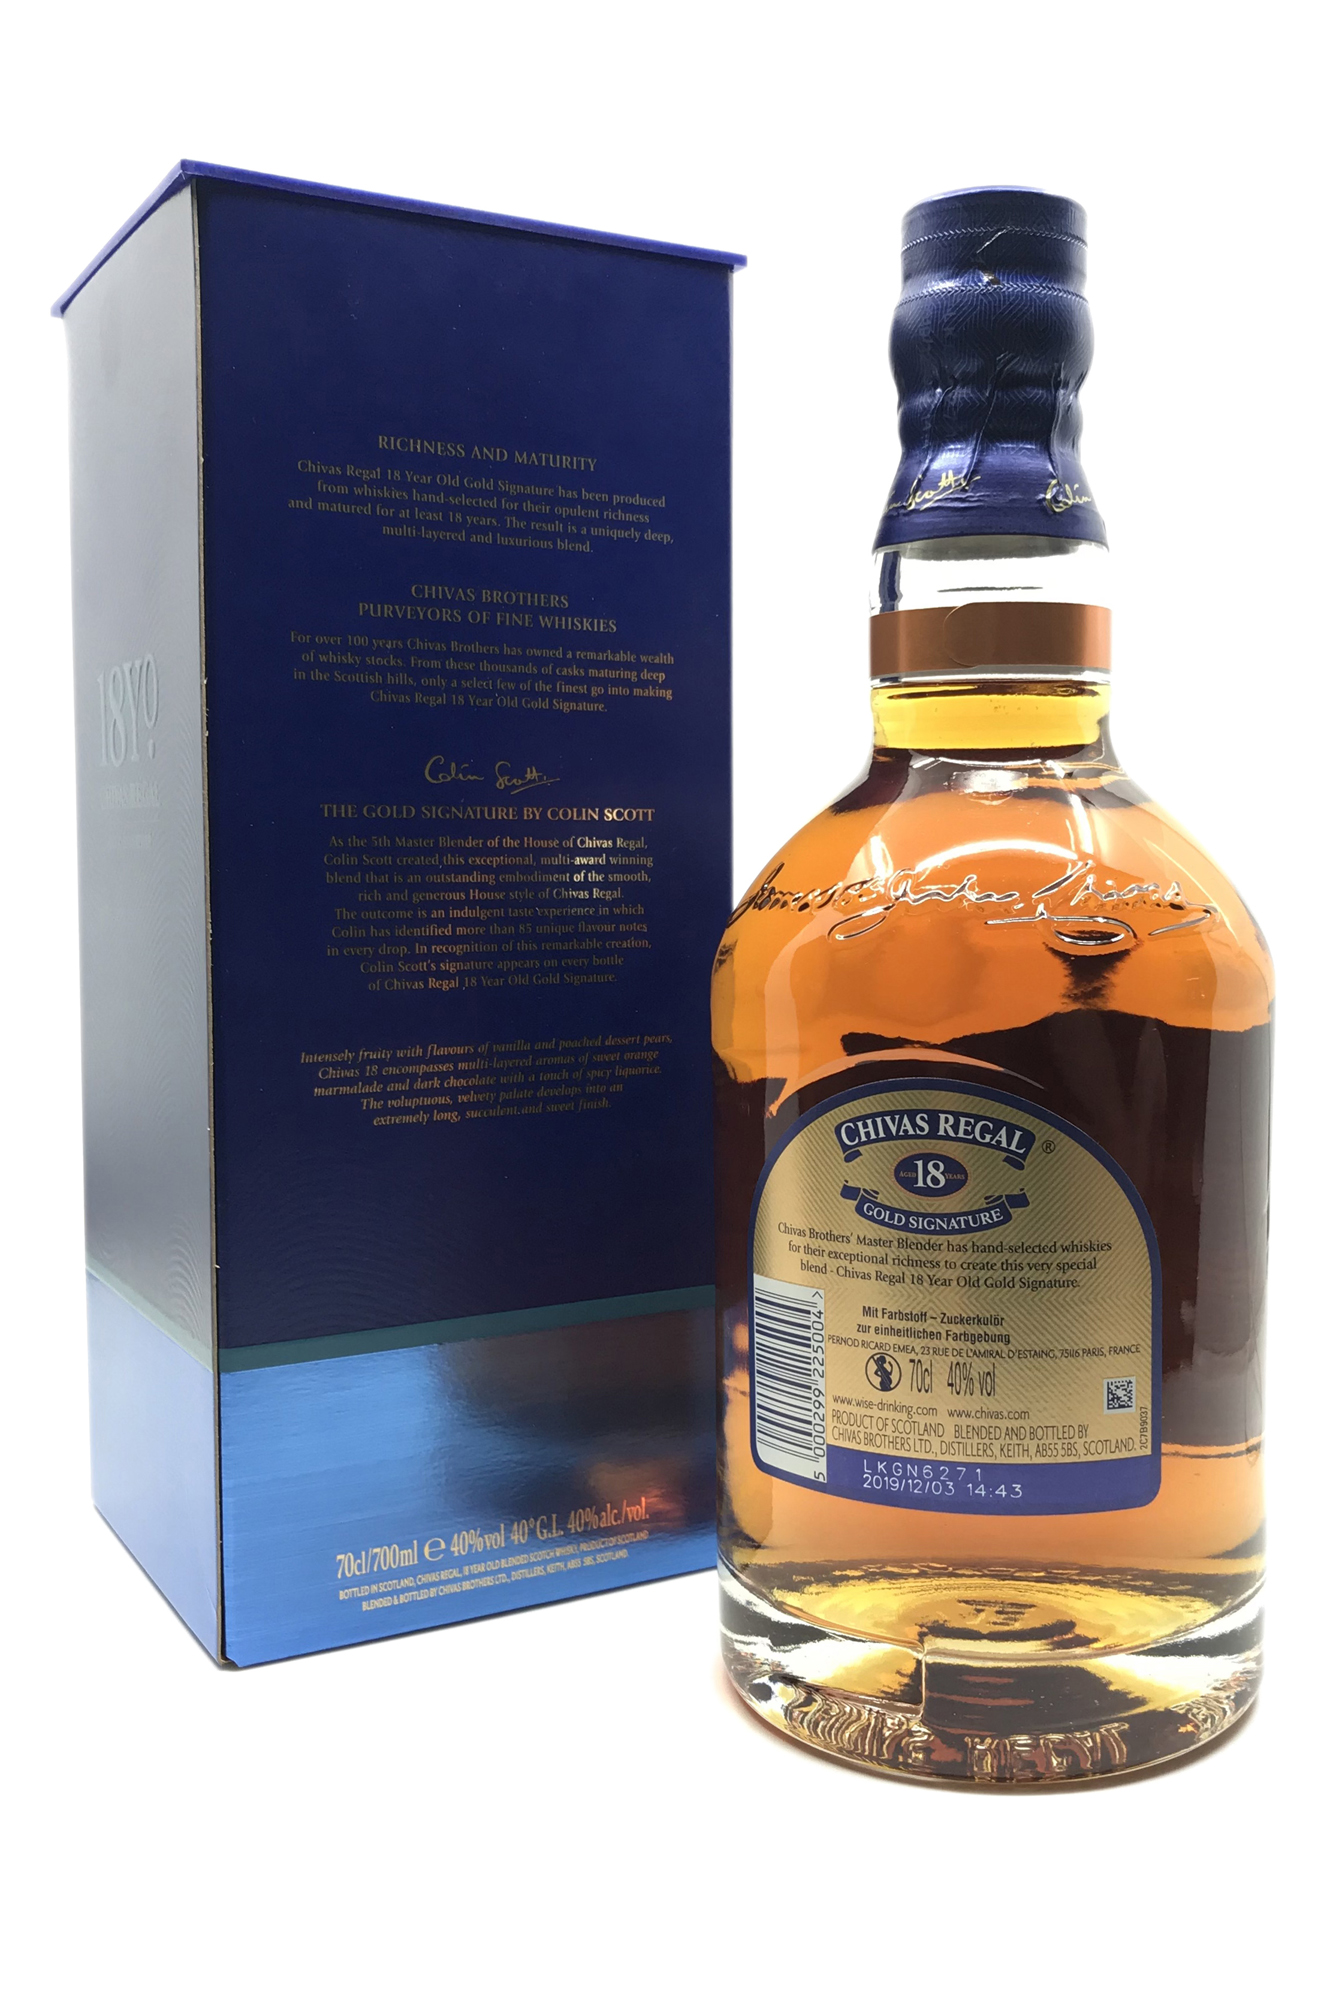 Chivas Regal 18 Jahre Gold Signature - Blended Scotch Whisky - 40% vol. Alk. - 0,7l - back